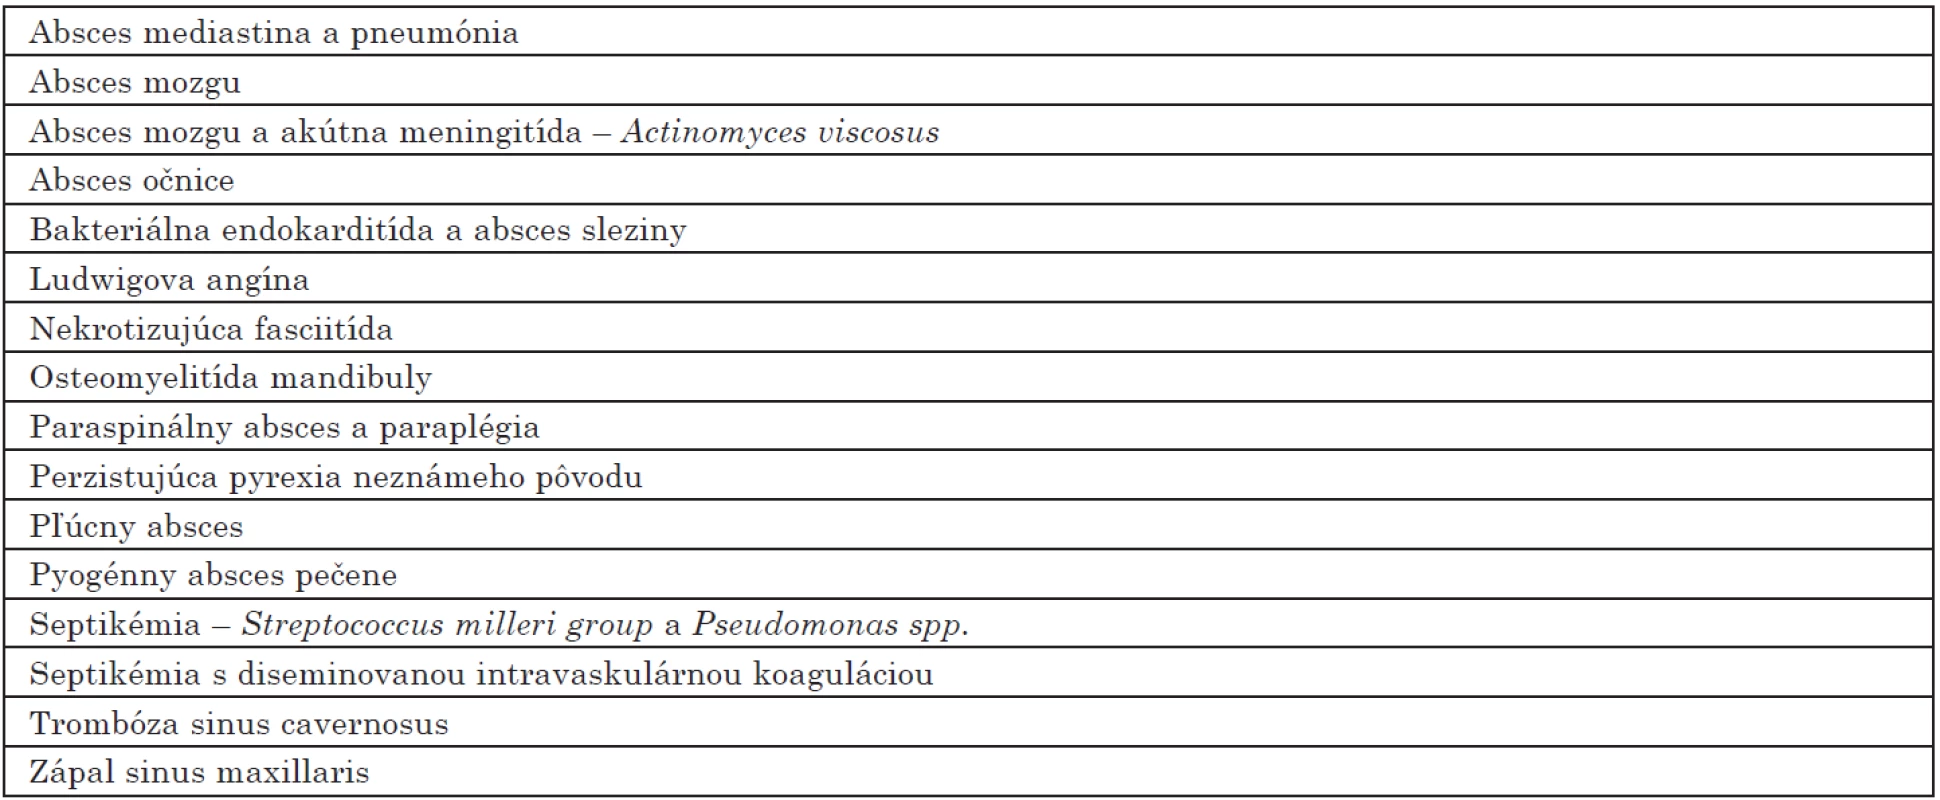 Komplikácie endodontického abscesu [22]
Table 1. Complications of an Endodontic Abscess [22]